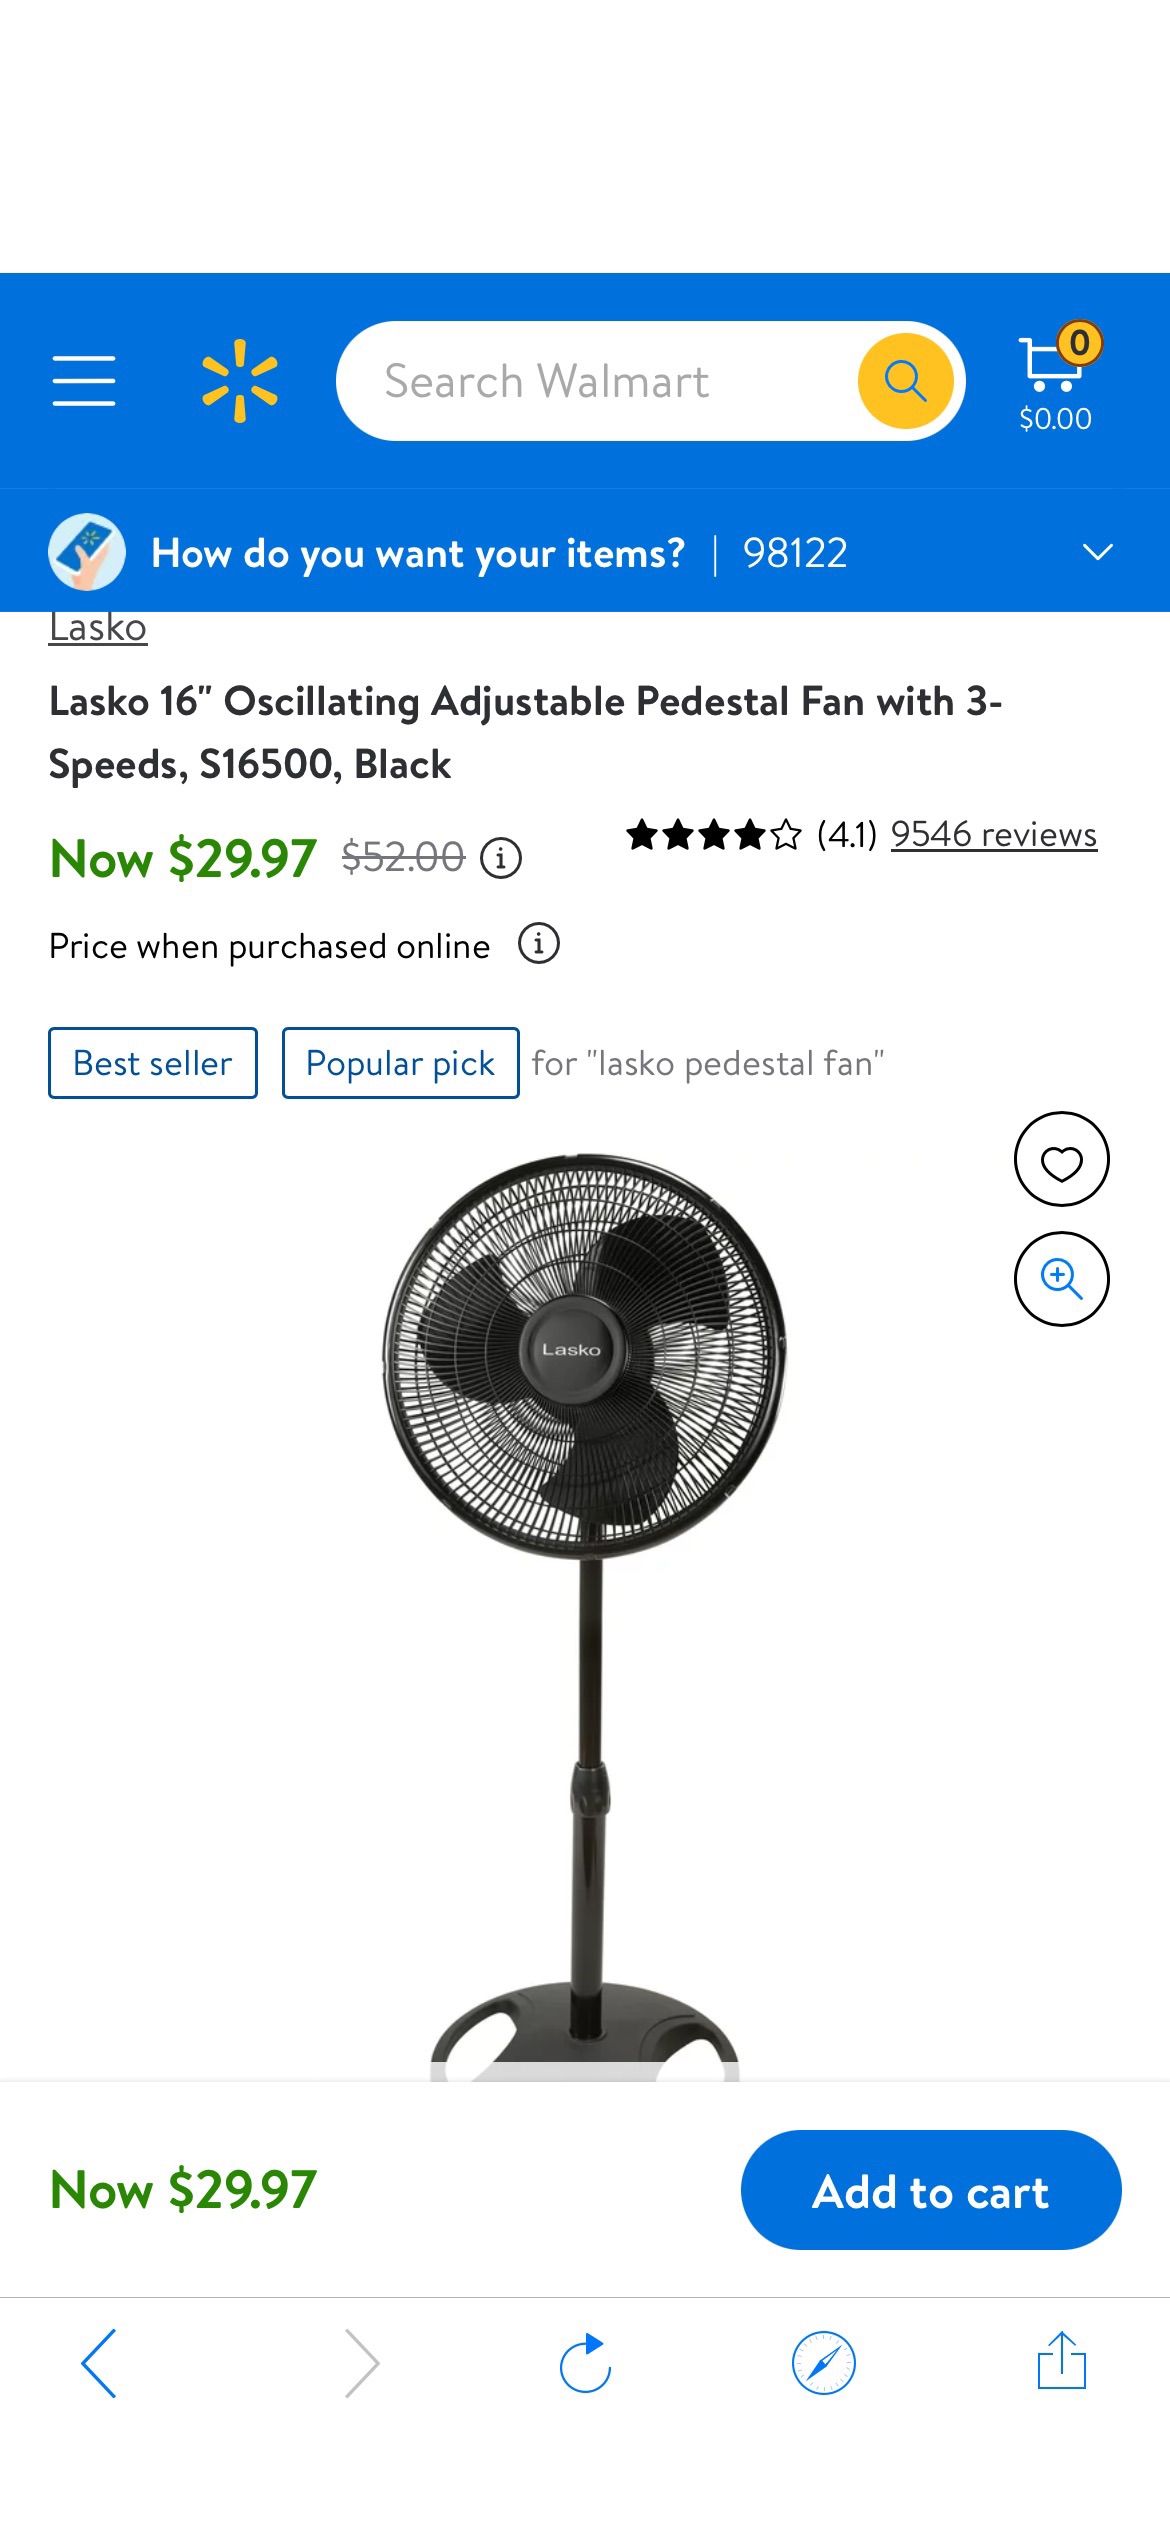 Lasko 16" Oscillating Adjustable Pedestal Fan with 3-Speeds, S16500, Black - Walmart.com